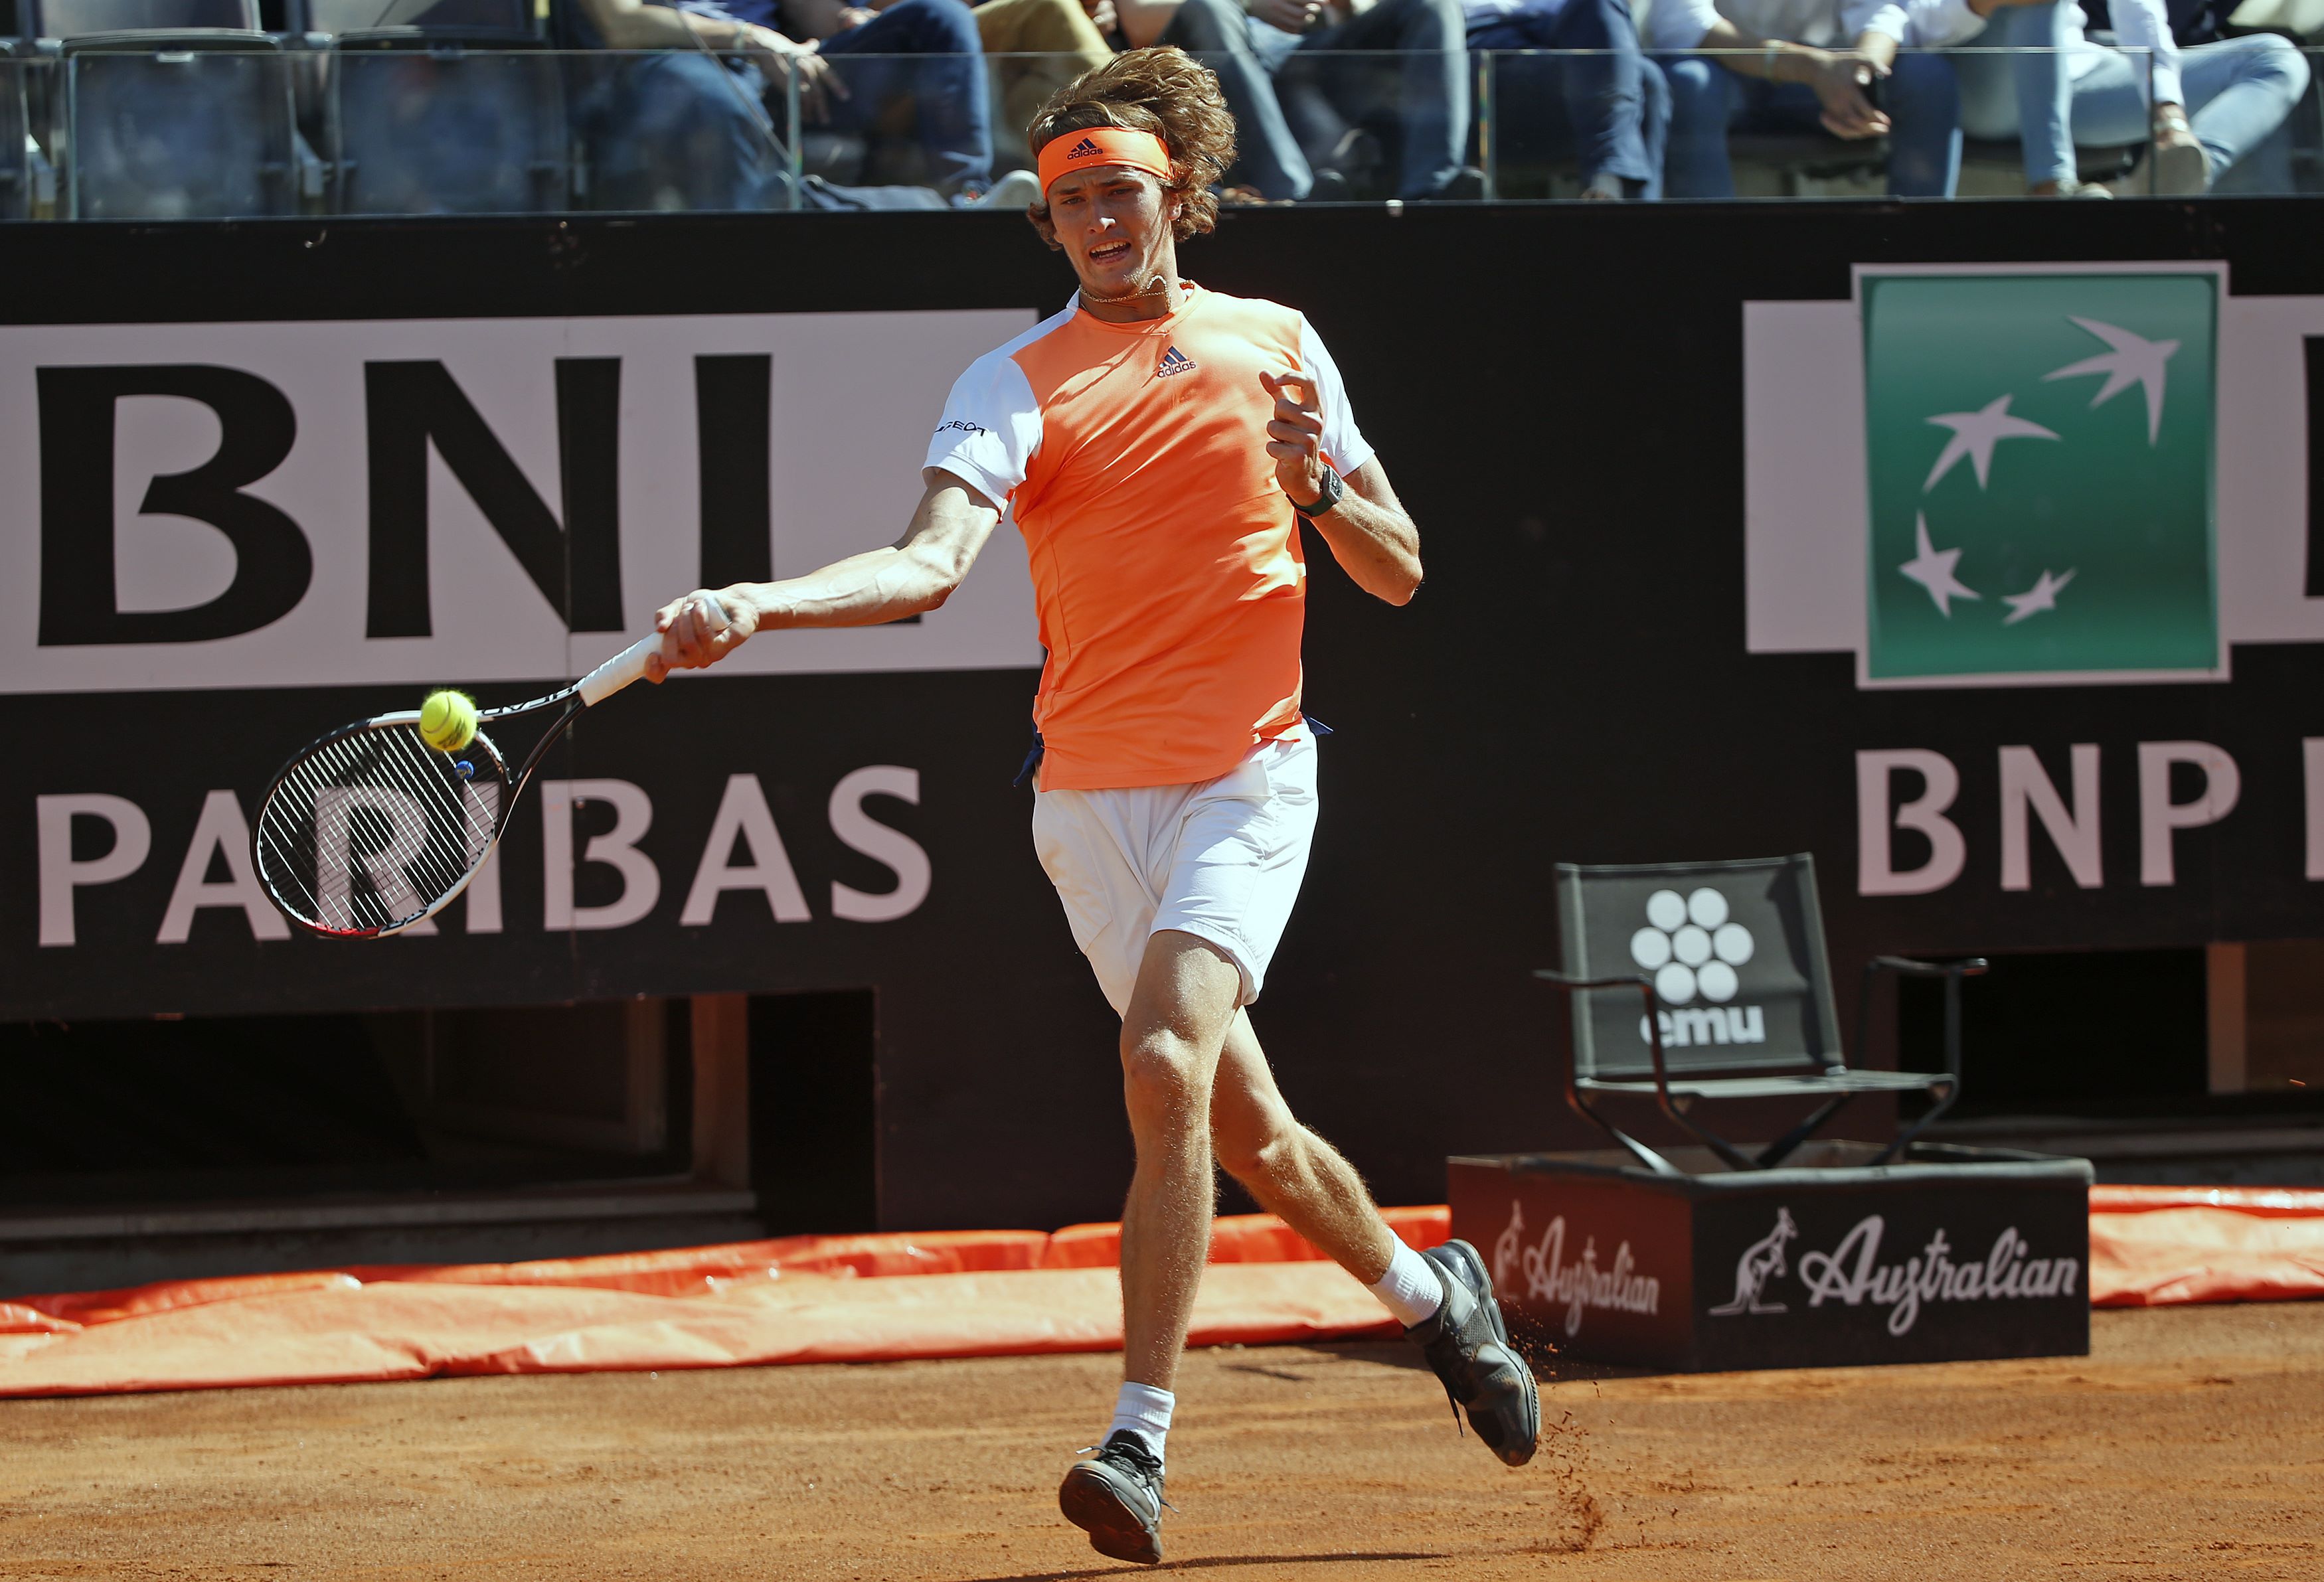 Tennis: Zverev downs Isner to reach Rome final